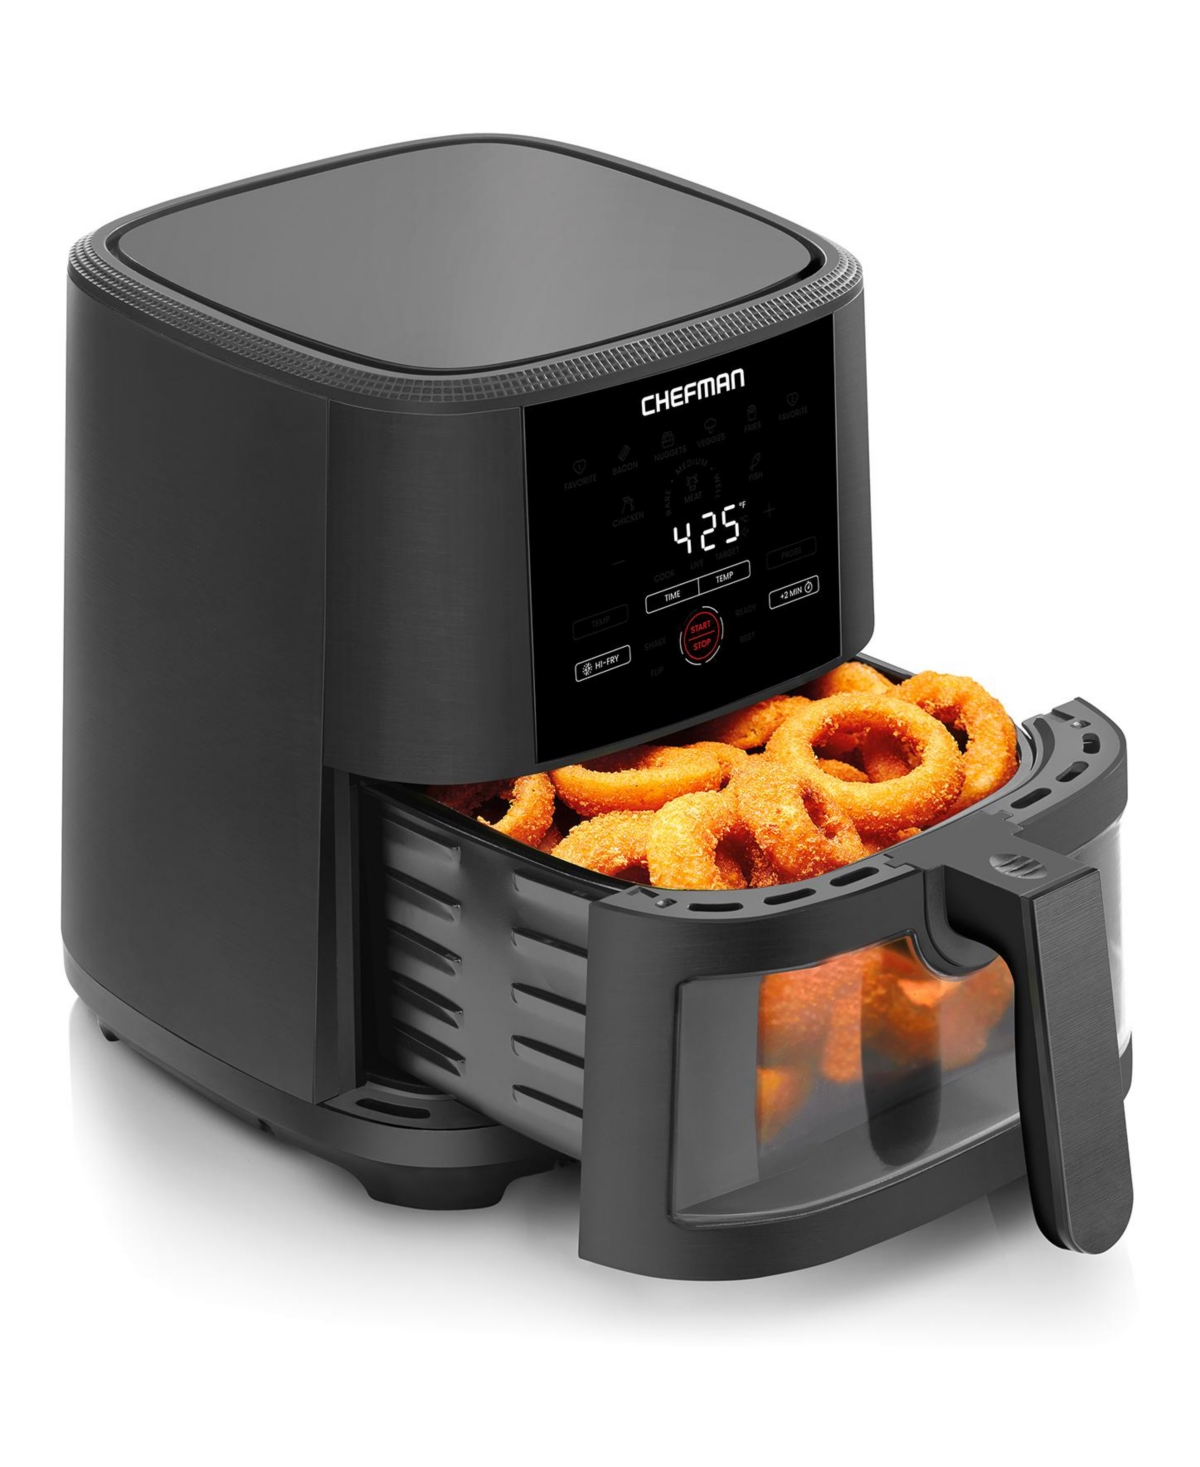 Chefman 5 Quart Air Fryer Easy View Window Digital With Temperature Probe In Black